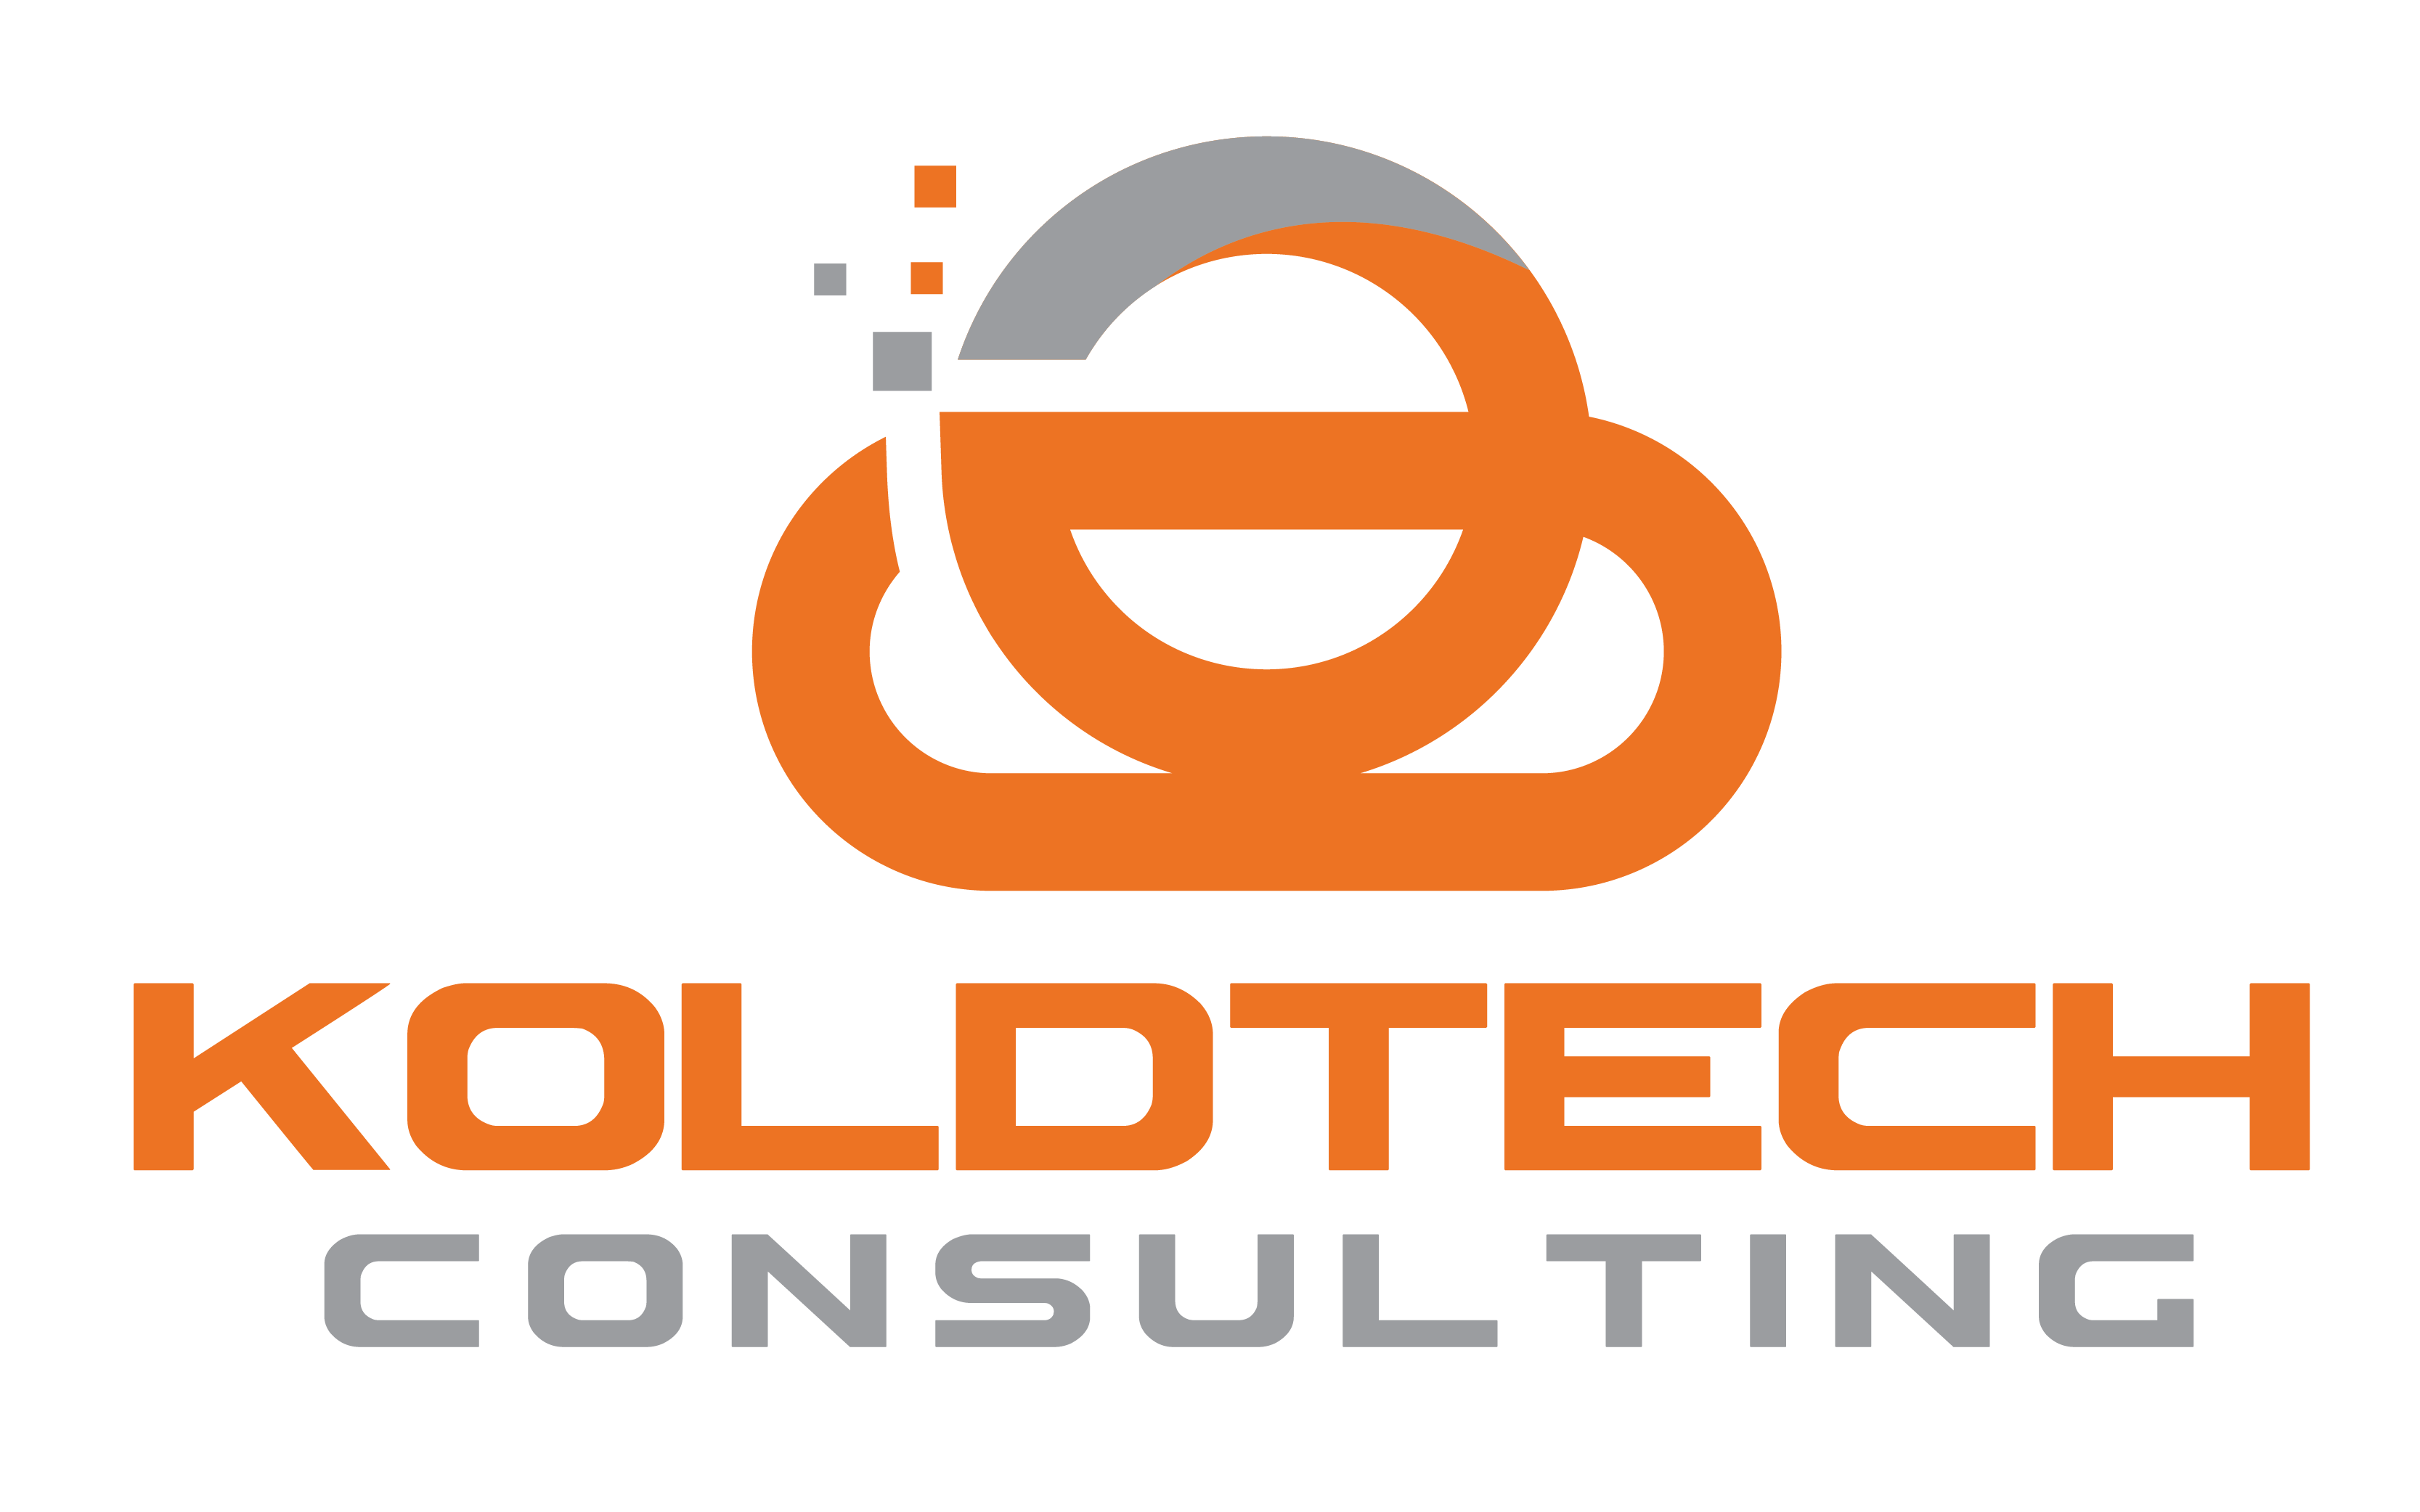 Koldtech Consulting Logo